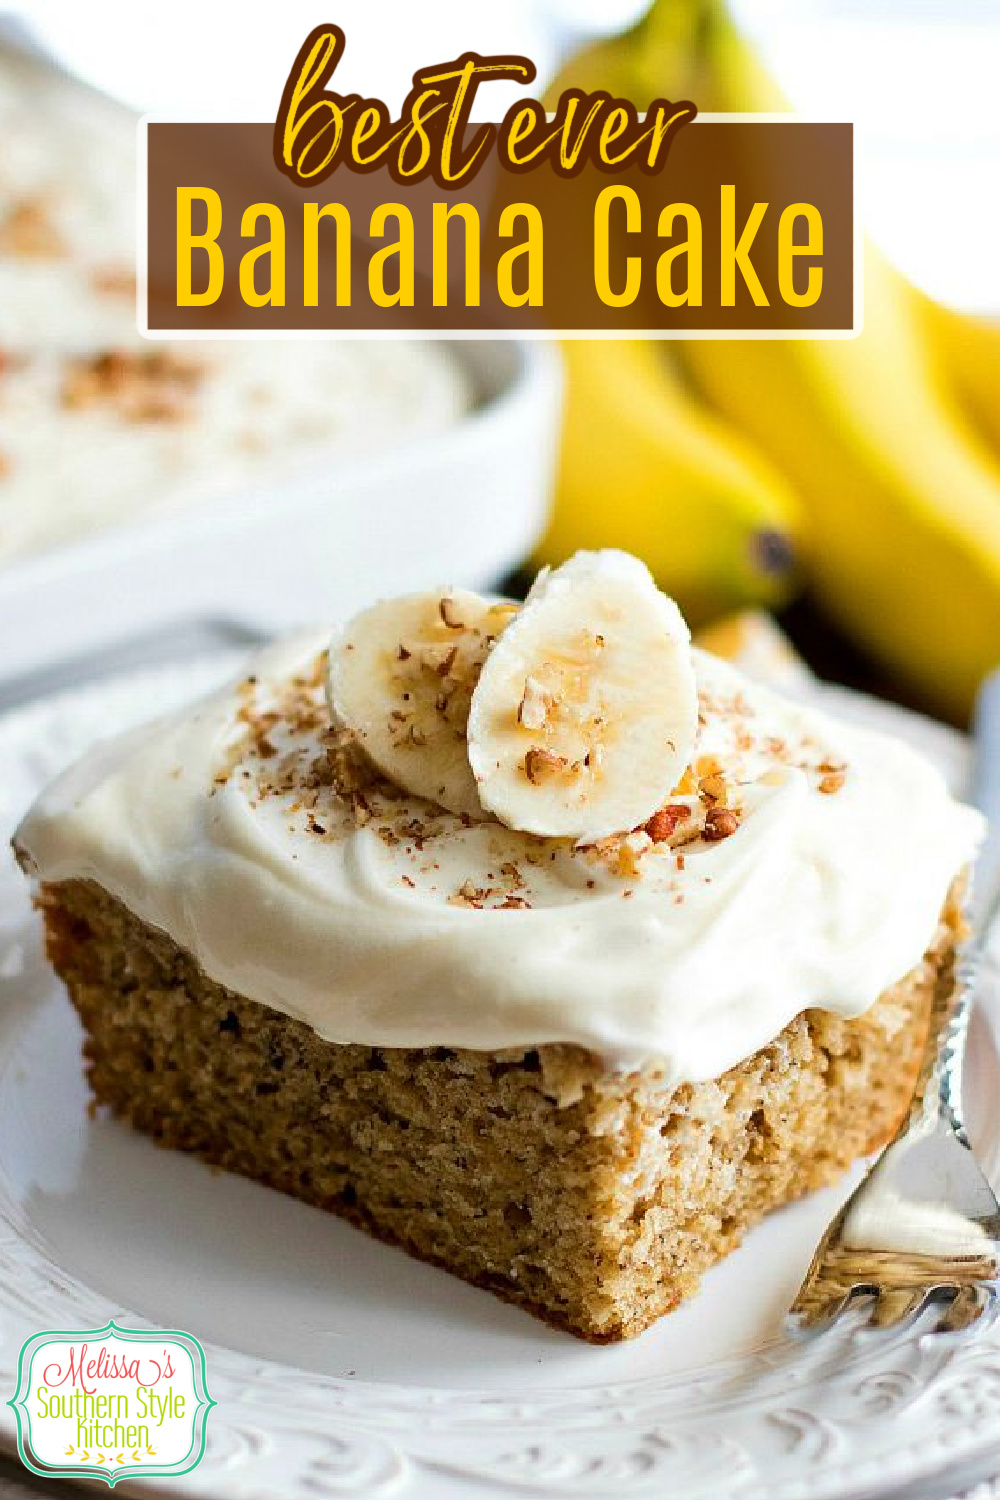 Use over ripe bananas to make this moist and flavorful Banana Cake #bananacake #sheetcakerecipes #bananasheetcake #brunch #breakfast #cakes #desserts #bananas #dessertfoodrecipes #southernfood #southernrecipes #holidaybaking